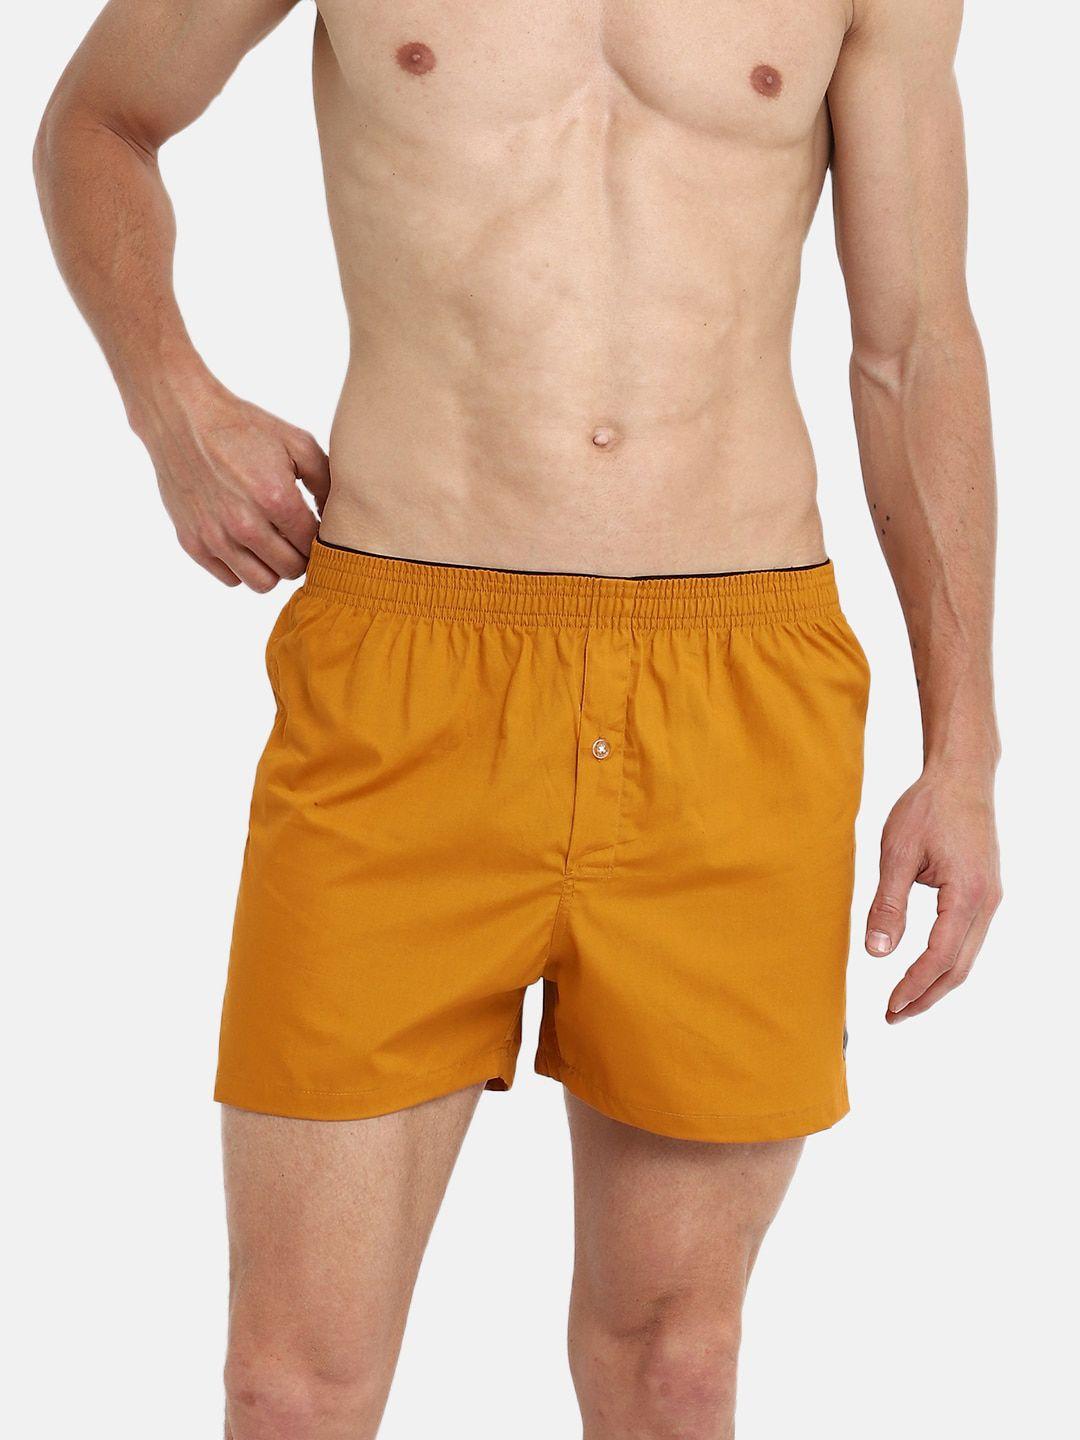 almo-wear-men-mustard-yellow-cotton-inner-boxers-b002-s-120